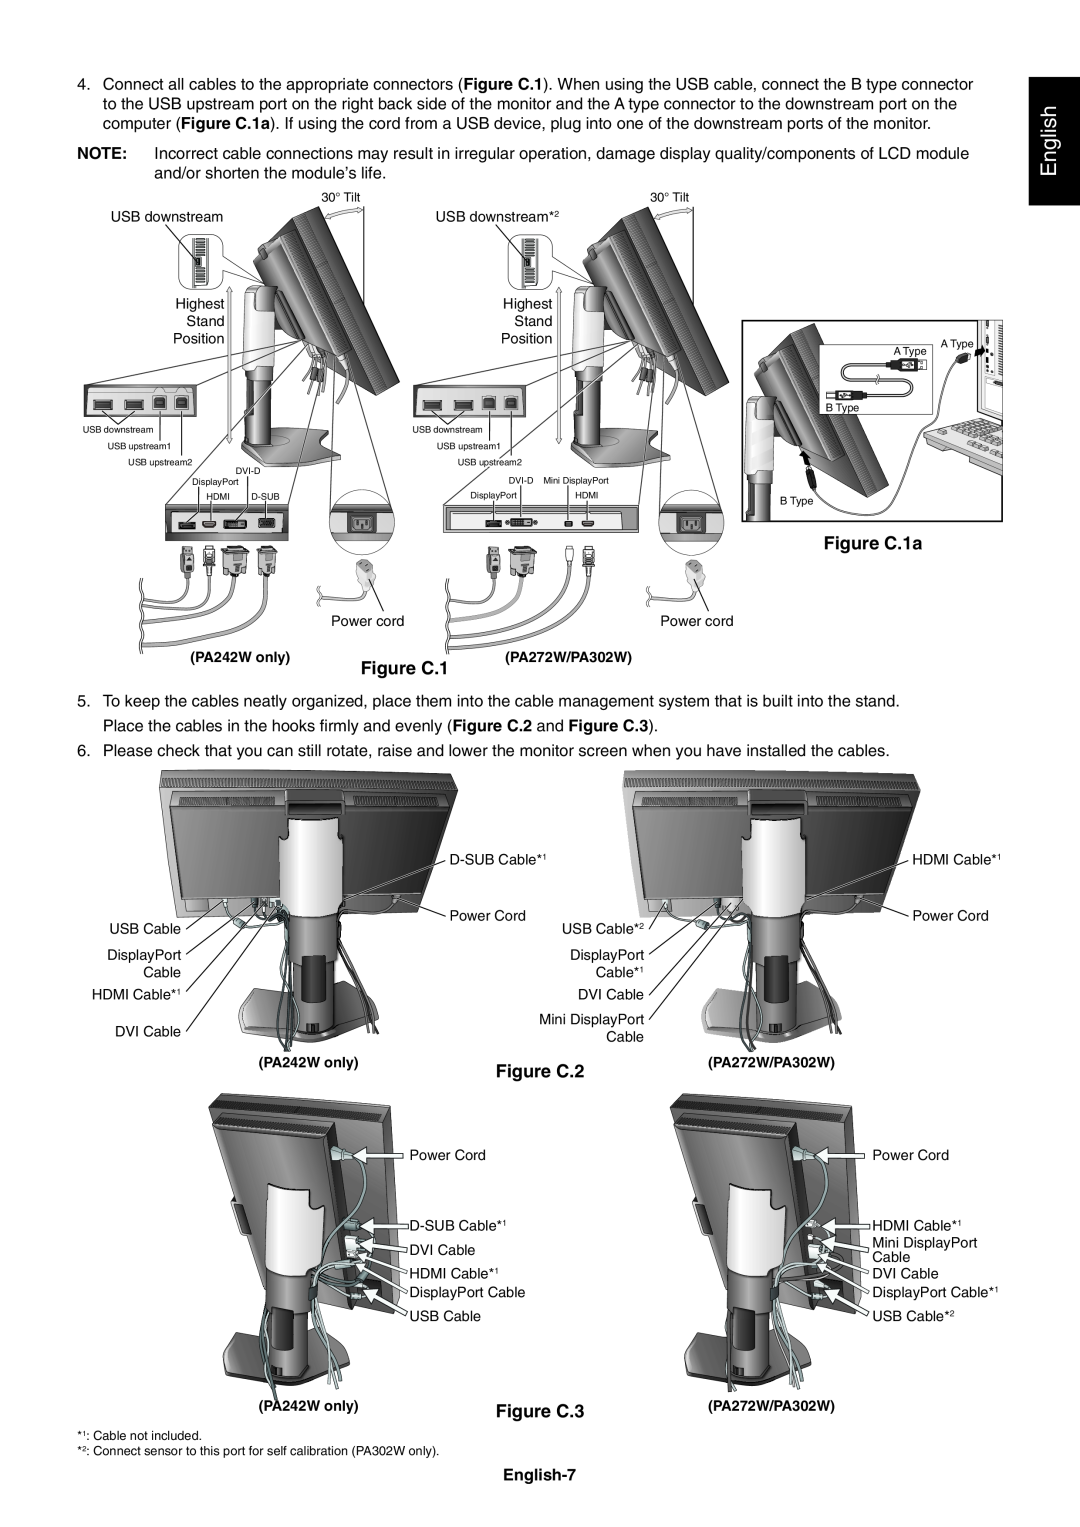 NEC PA242W user manual Figure C.1a, Figure C.2, Figure C.3, English-7 